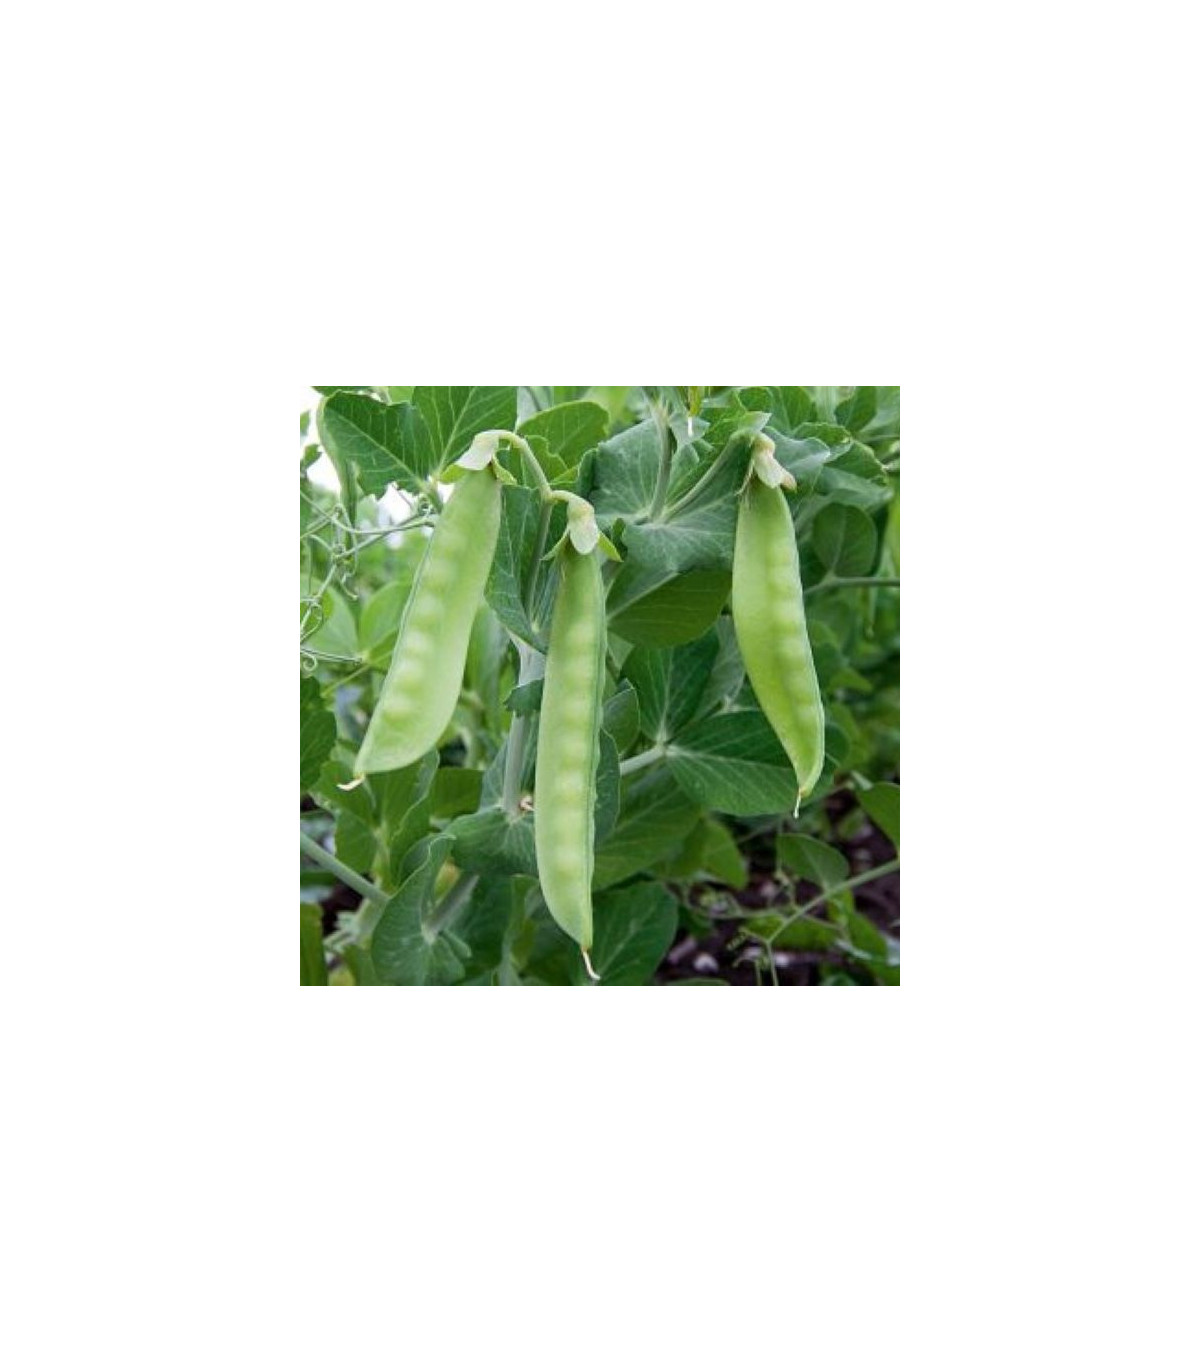 BIO hrach cukrový Ambrosia - Pisum sativum - bio semená hrachu - 45 ks